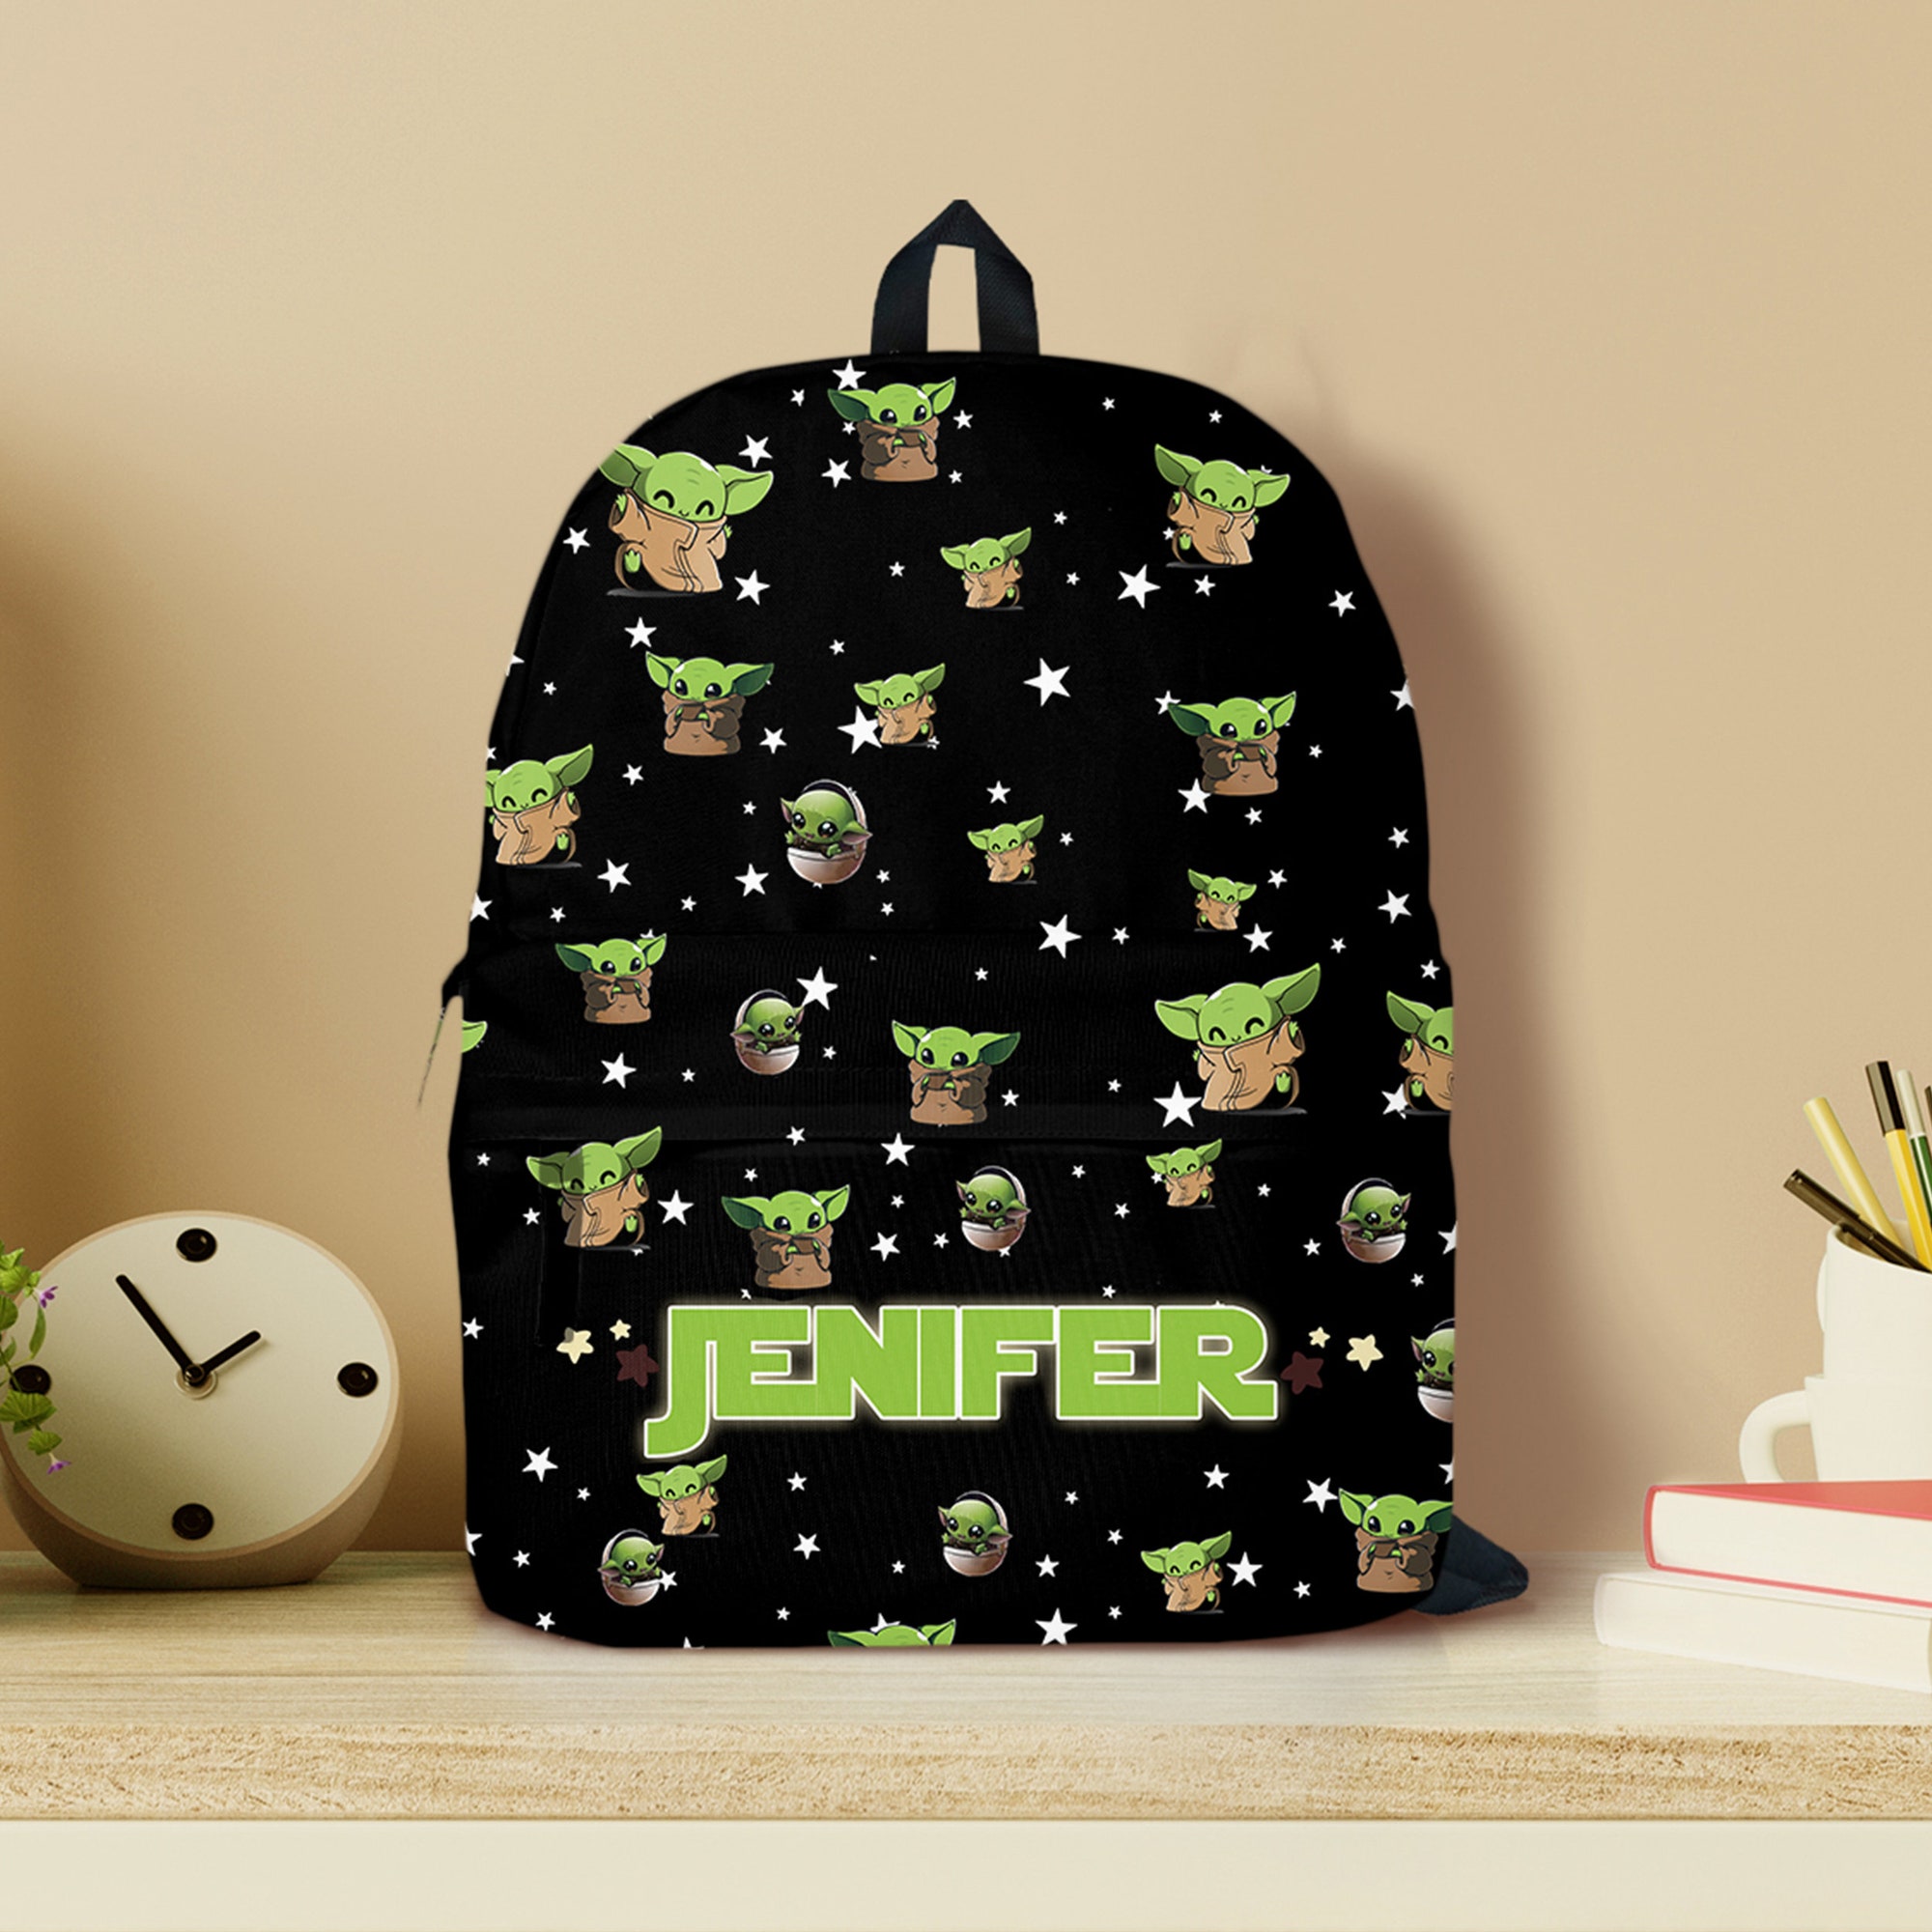 Baby Yoda Backpack, Customize Boys Girls Student The Child Baby Yoda School Backpack,